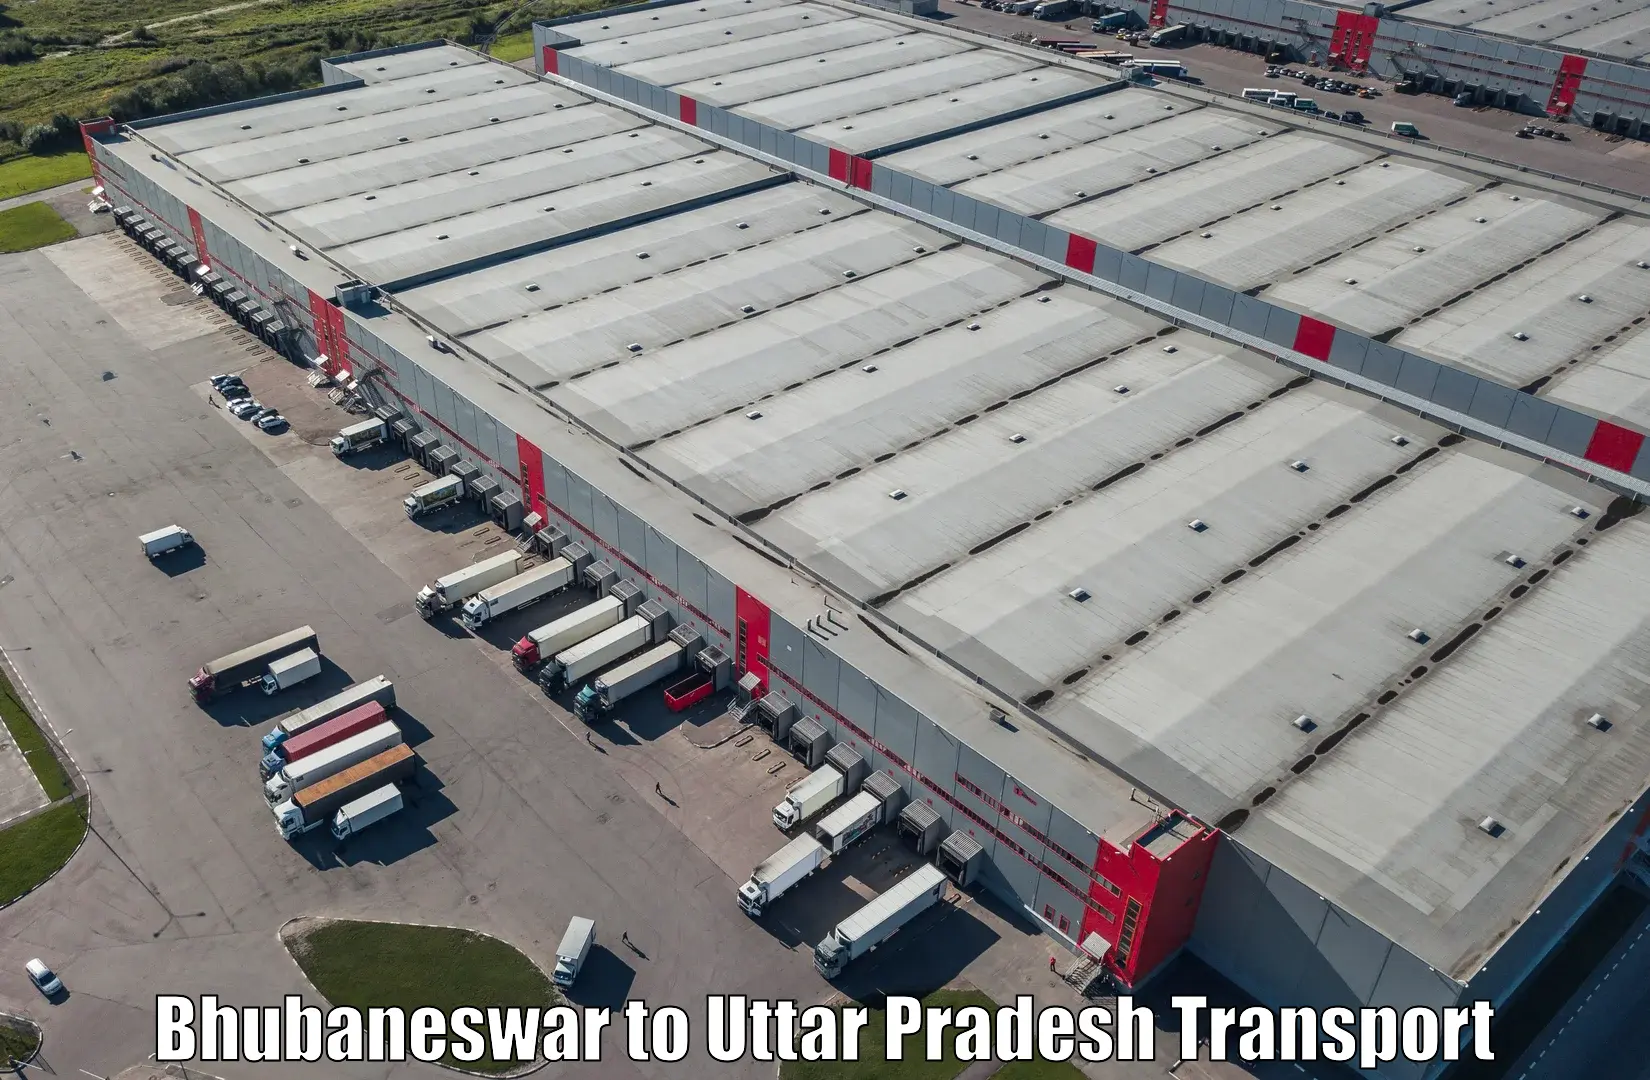 Truck transport companies in India Bhubaneswar to Chunar